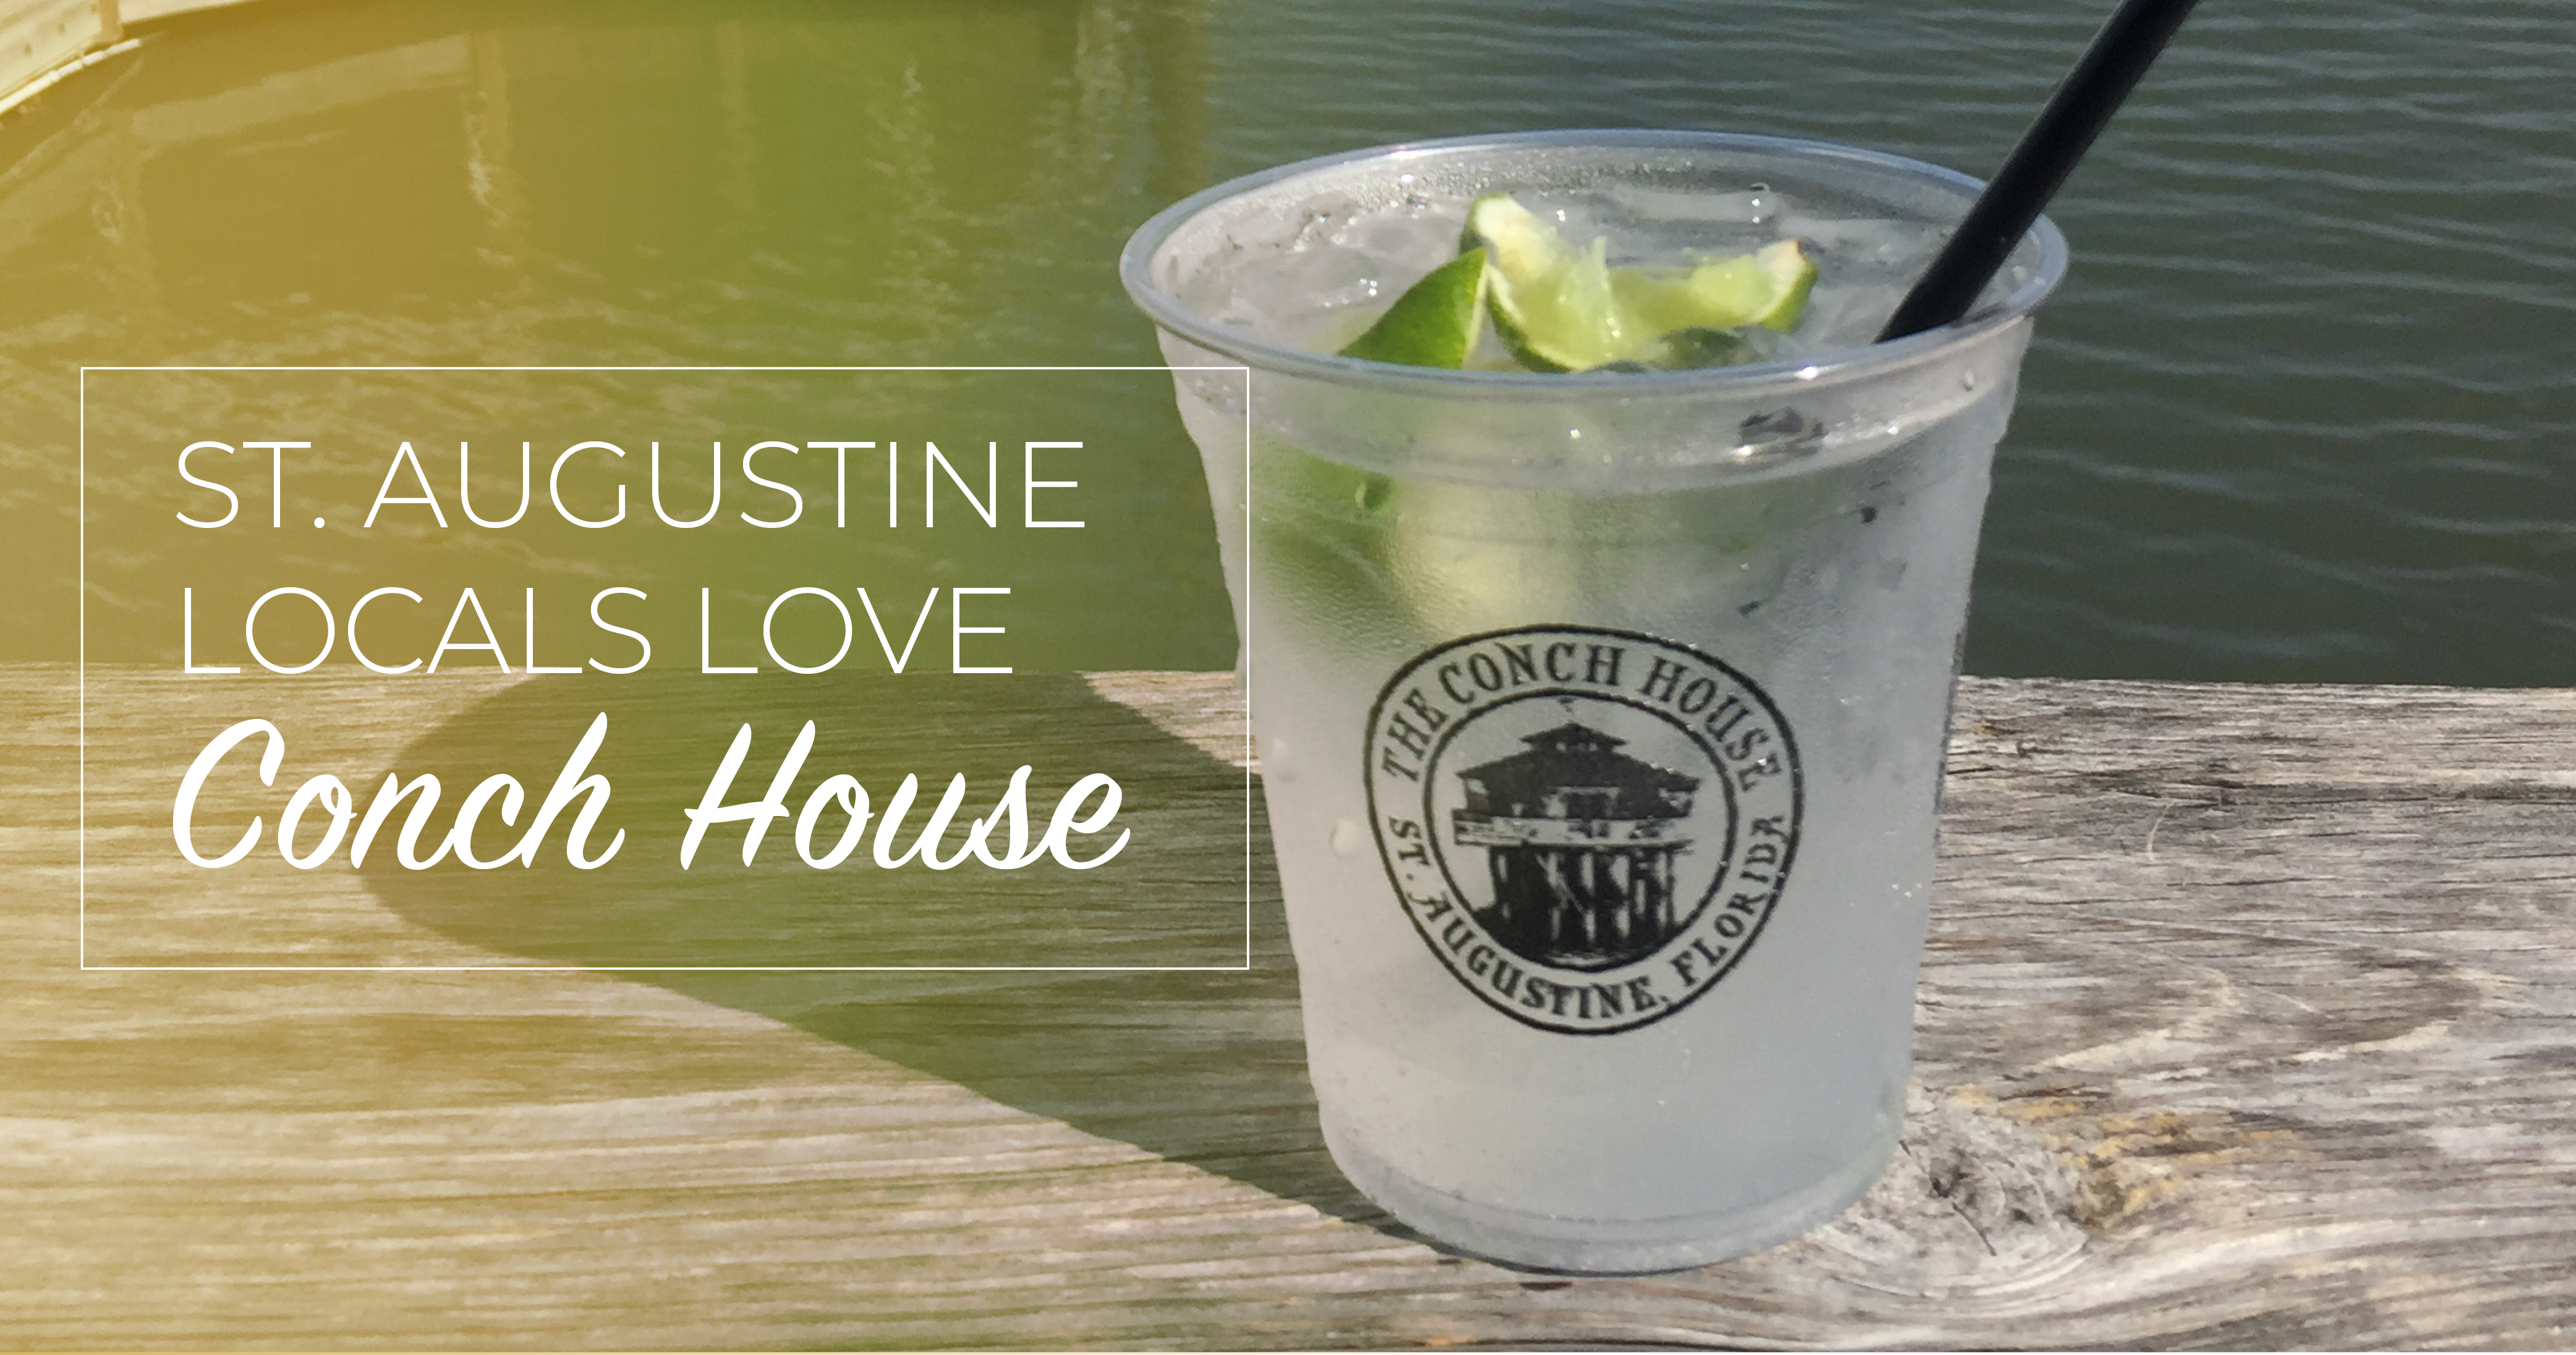 St. Augustine Locals Love: Conch House